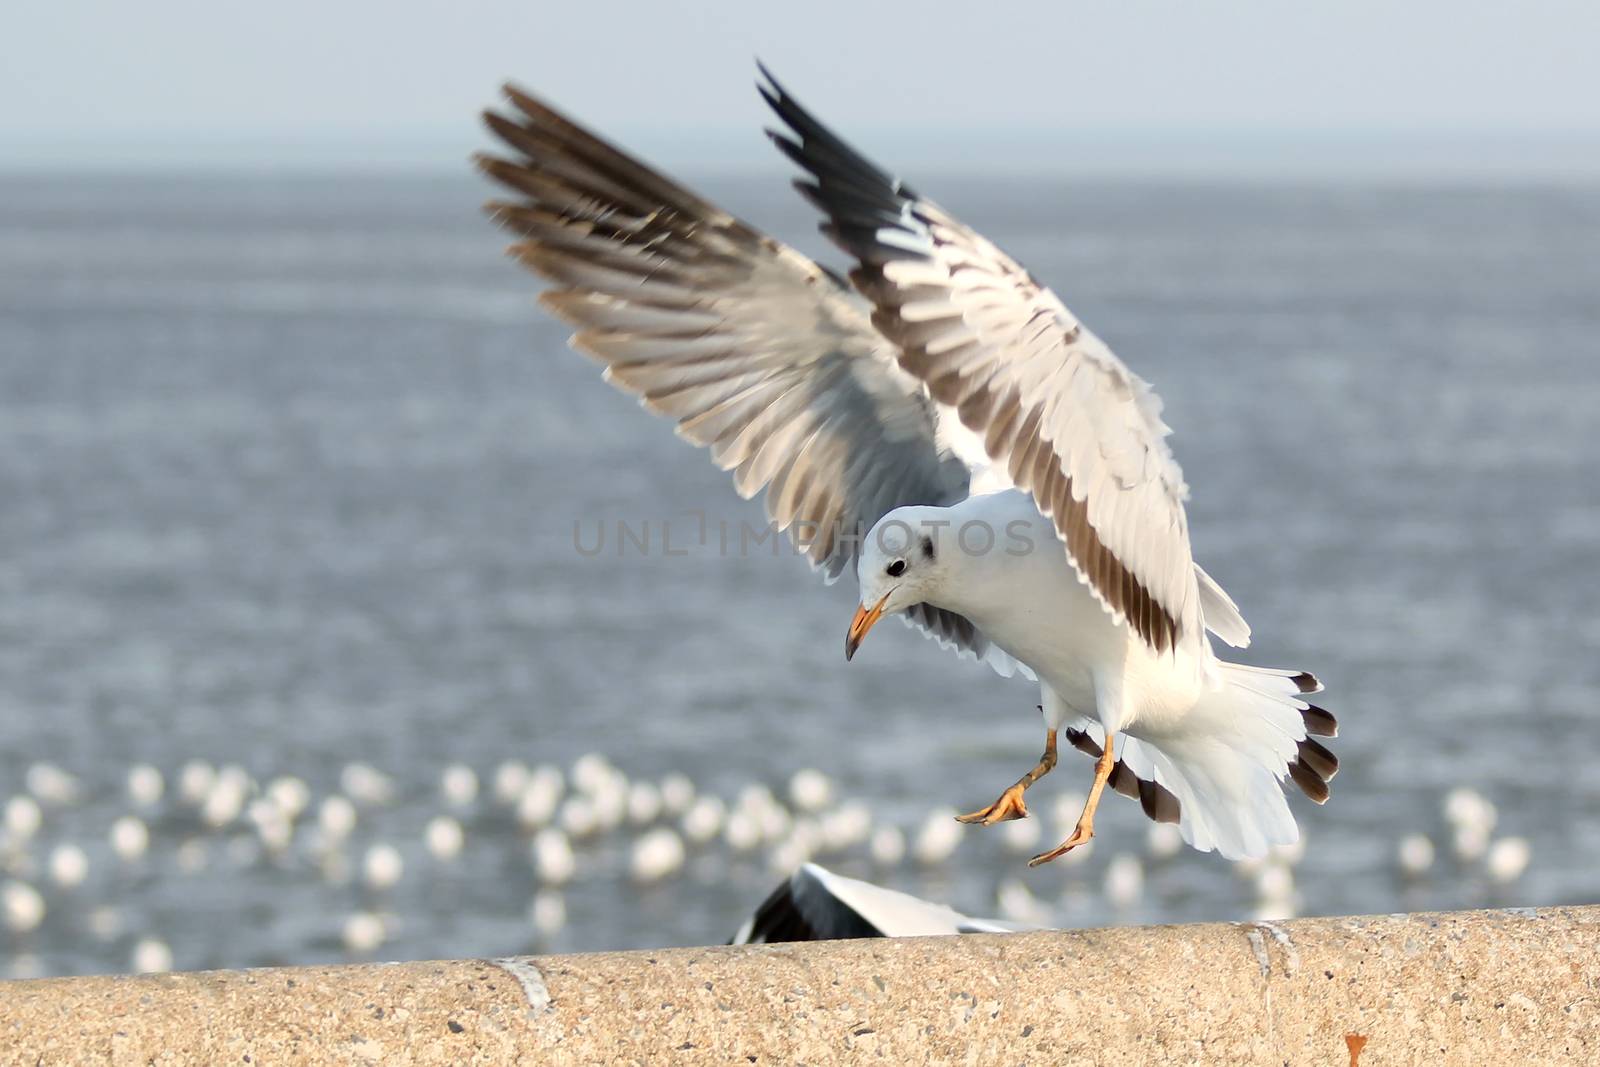 landing Seagull by leisuretime70